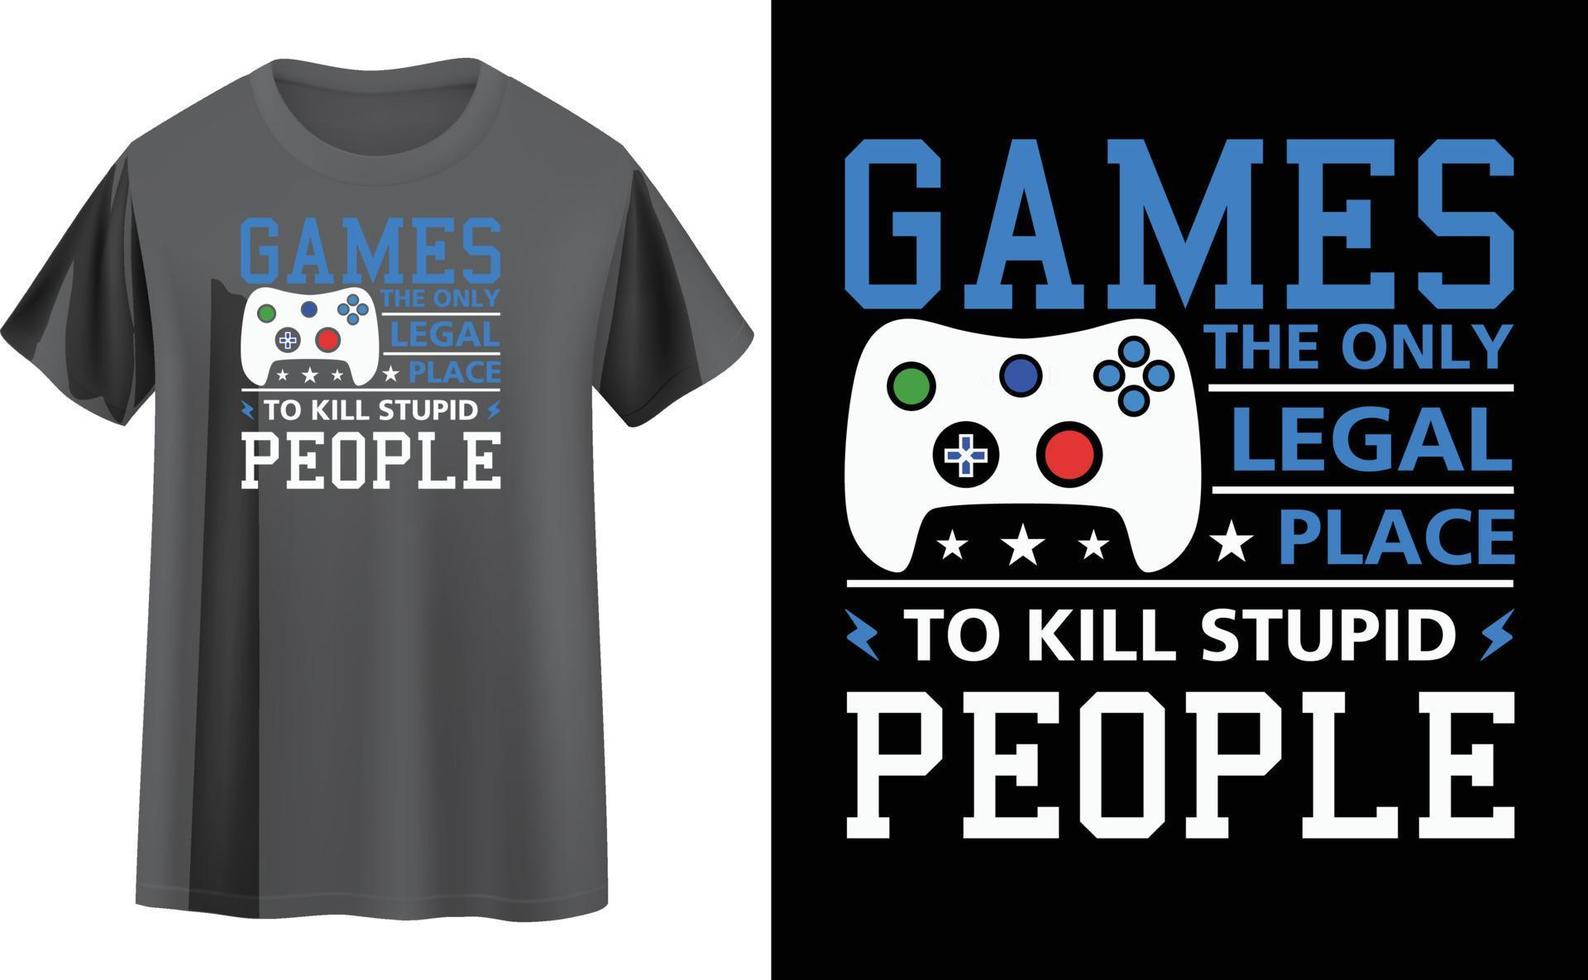 Gaming-T-Shirt-Design vektor